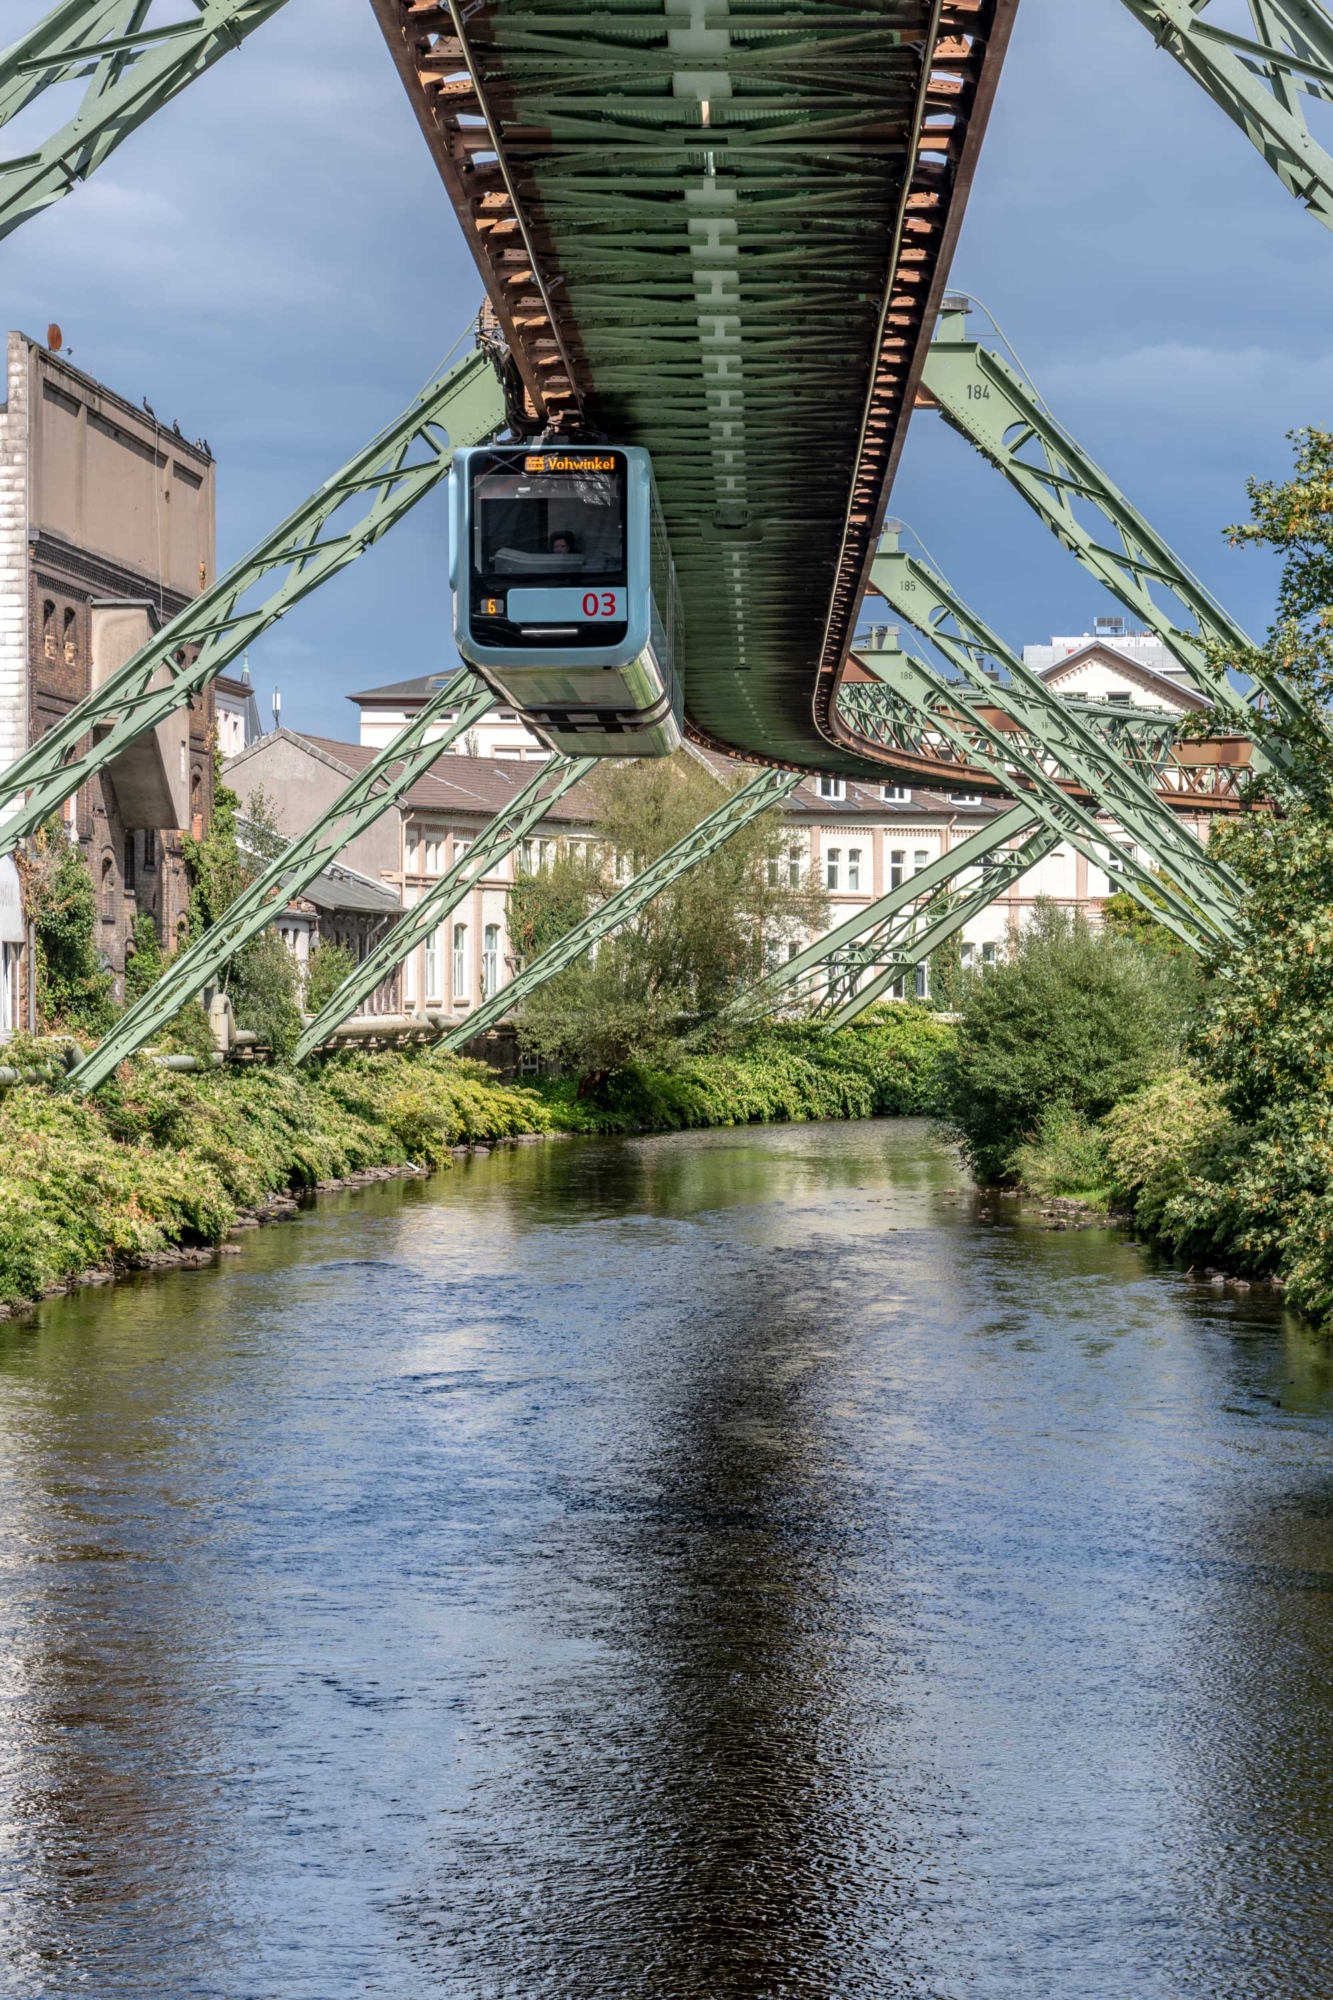 Wuppertal Schwebebahn Monorail, Germany 190905wc859633-2